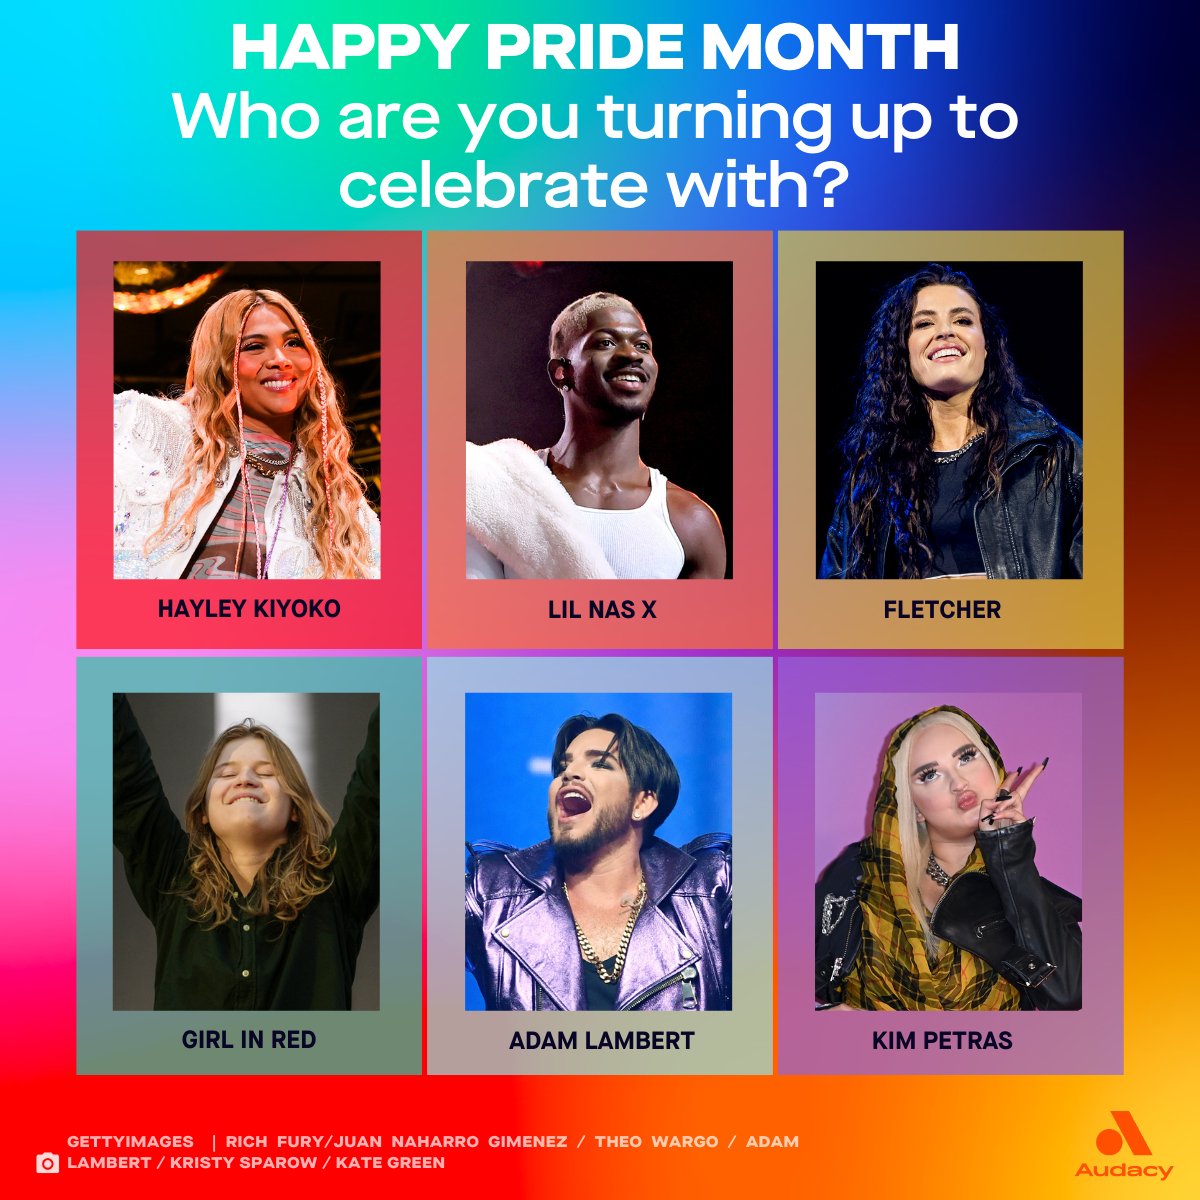 HAPPY PRIDE MONTH 🌈 

✨ @HayleyKiyoko 
✨ @LilNasX 
✨ @findingfletcher 
✨ @_girlinred_ 
✨ @adamlambert 
✨ @kimpetras 

🏳️‍🌈 Celebrate with 'Pride 365' Radio: auda.cy/PrideTW